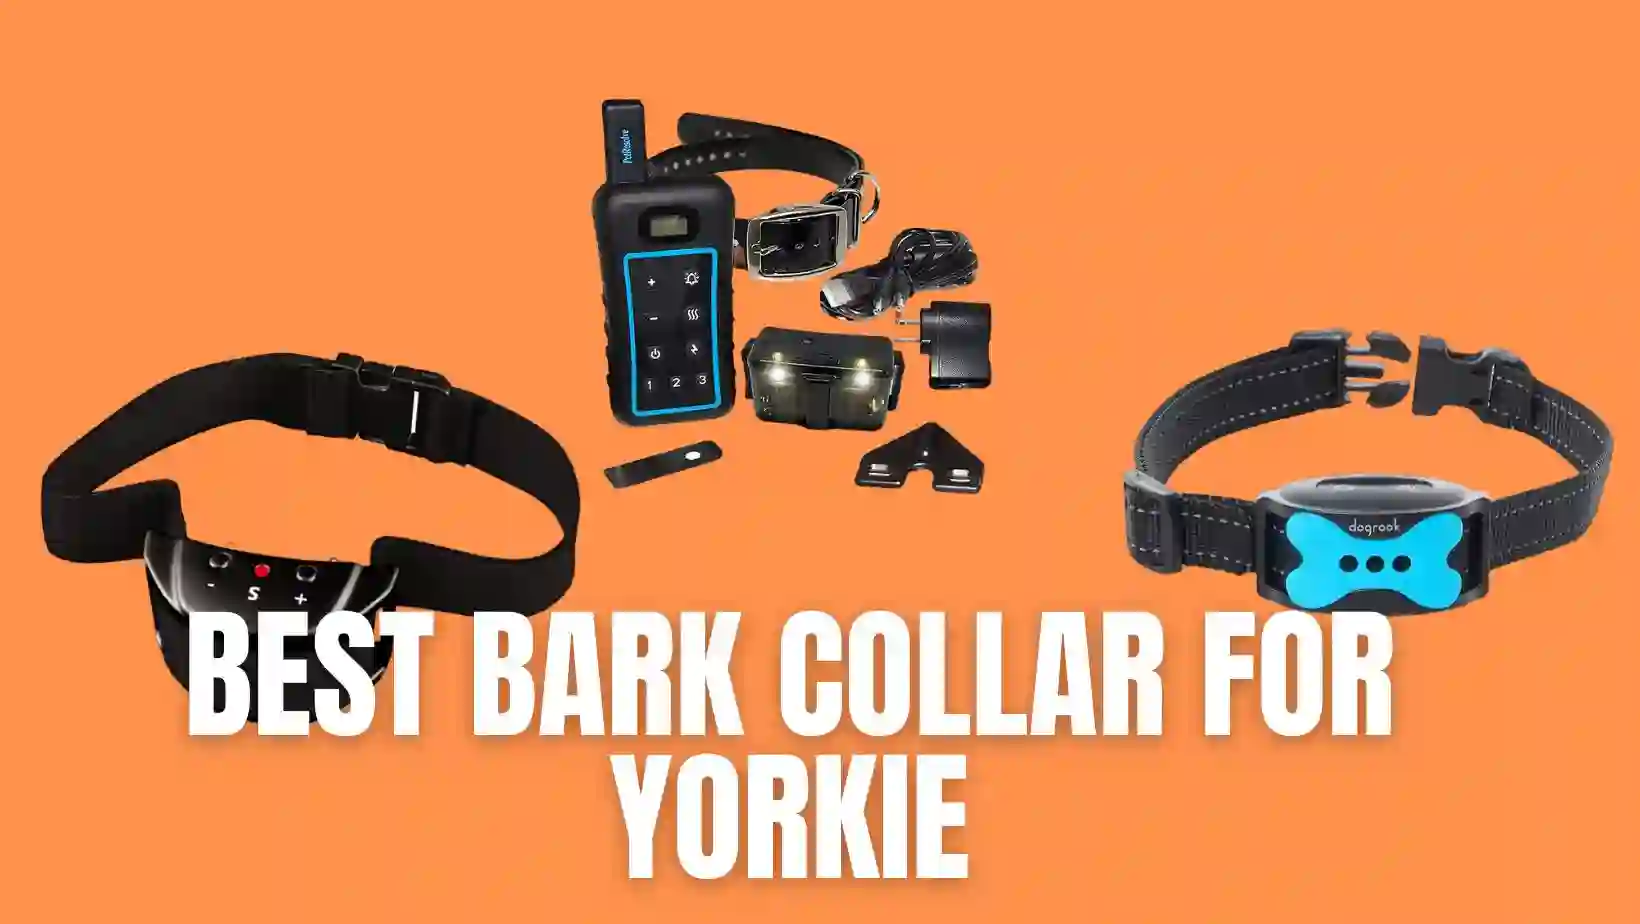 Best Bark Collar for Yorkie